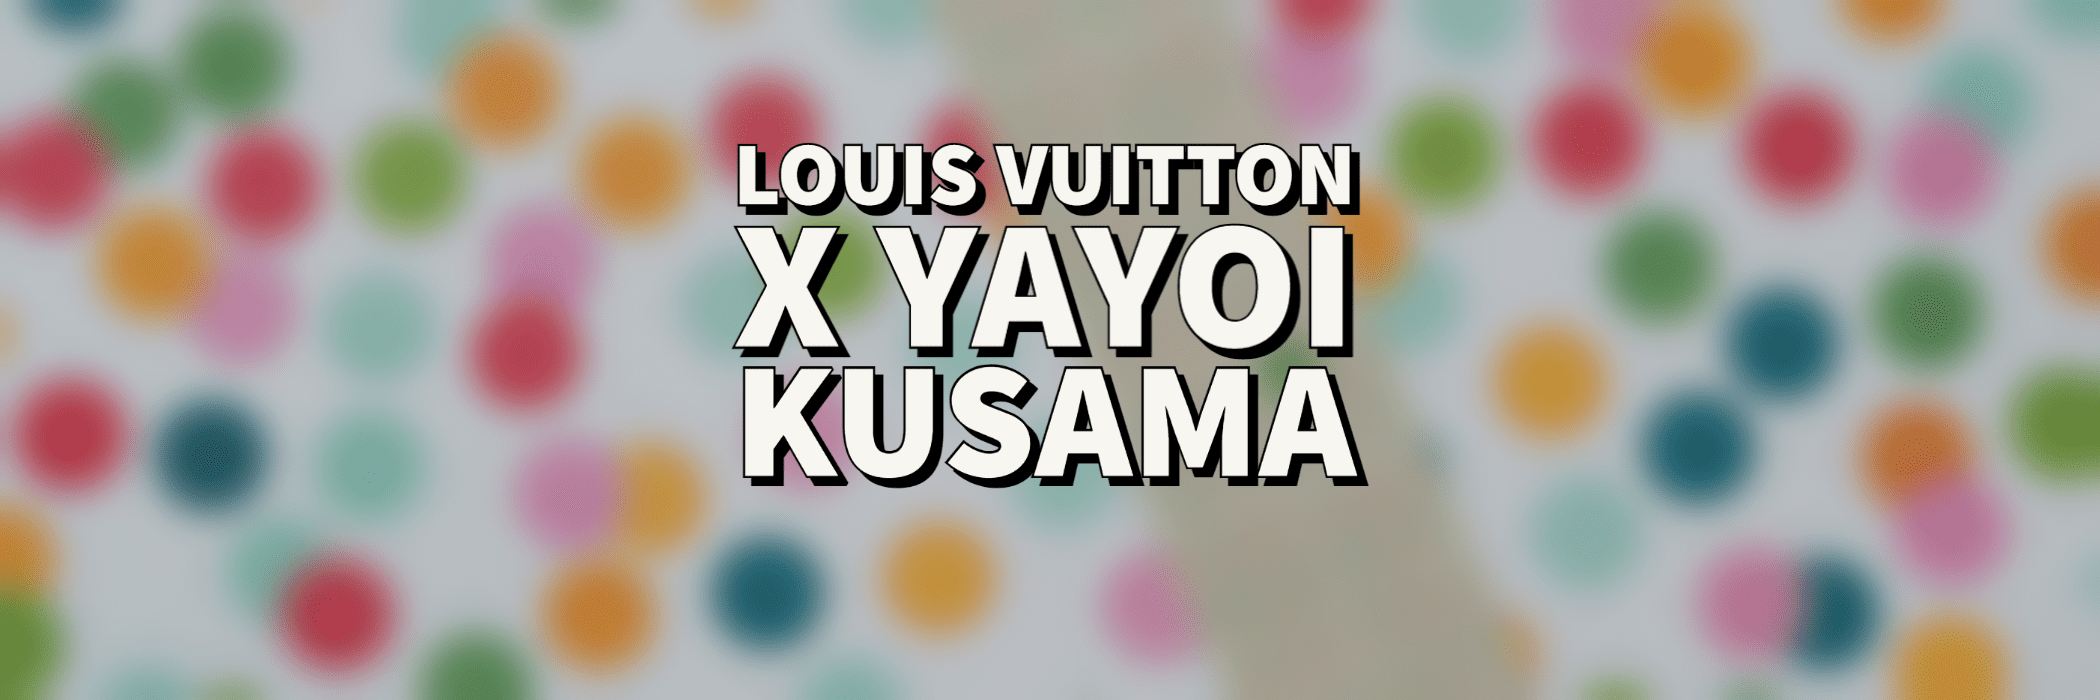 Louis Vuitton Celebrates 200th Anniversary with NFT Partnership featuring  Yayoi Kusama: Correction False, NFT CULTURE, NFT News, Web3 Culture